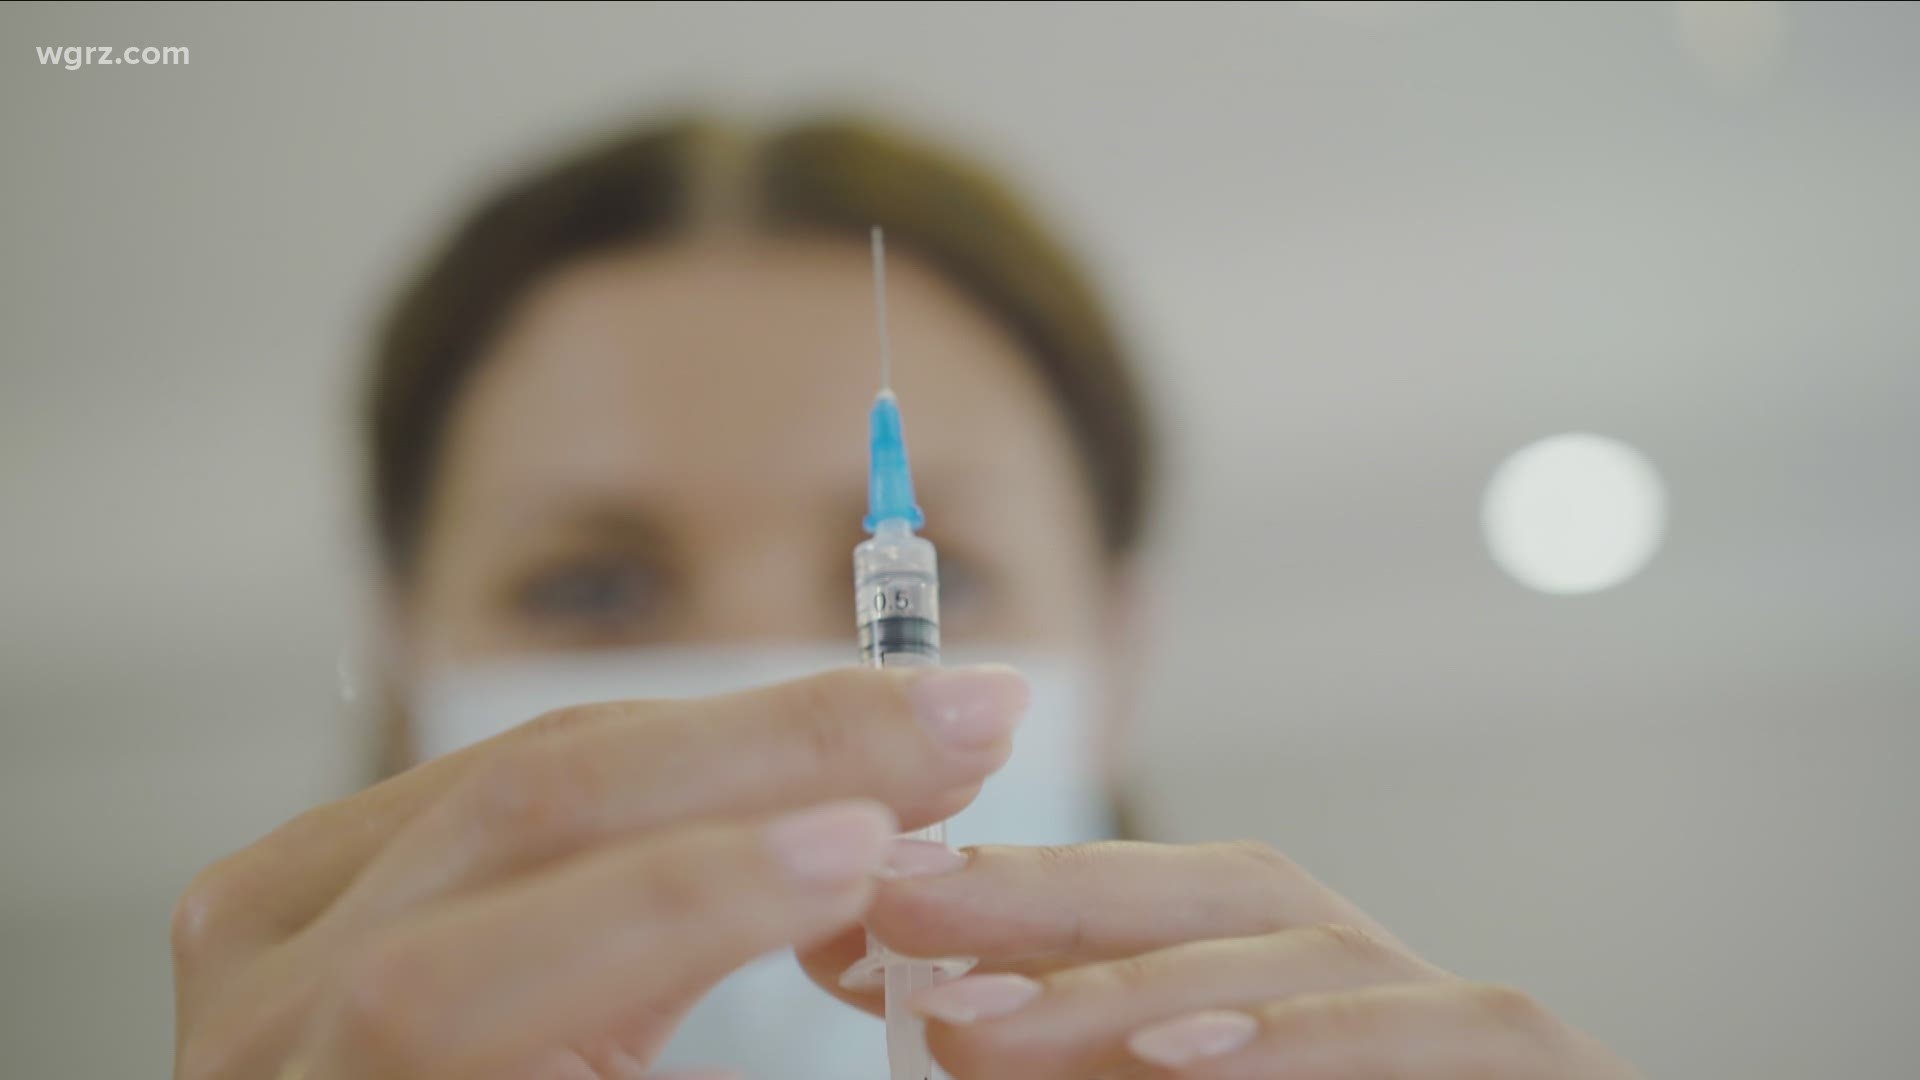 Vaccine efforts ramping up